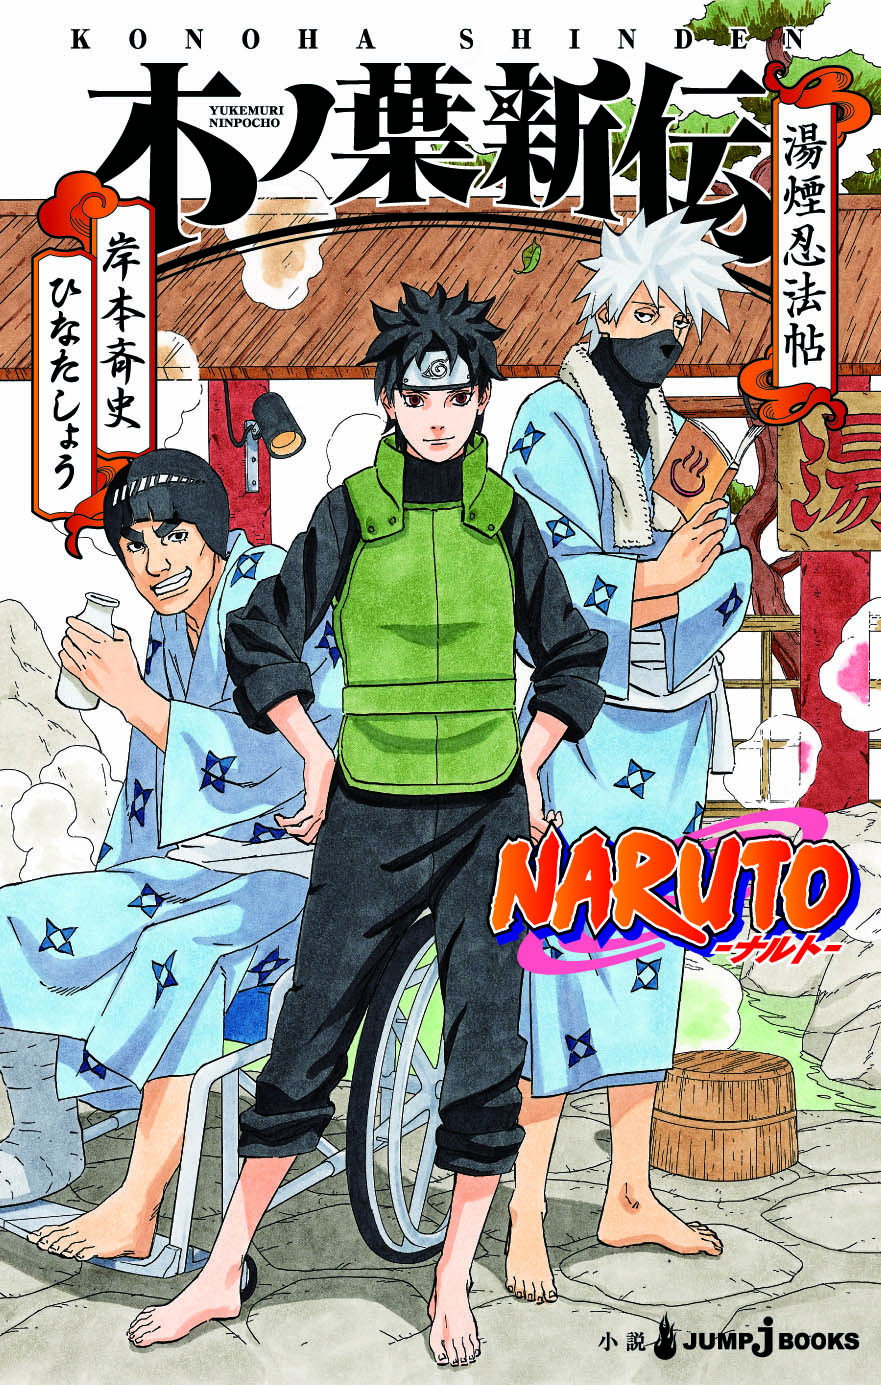 Manga Version of Naruto: Konoha's Story Novel Starts 10/29 on